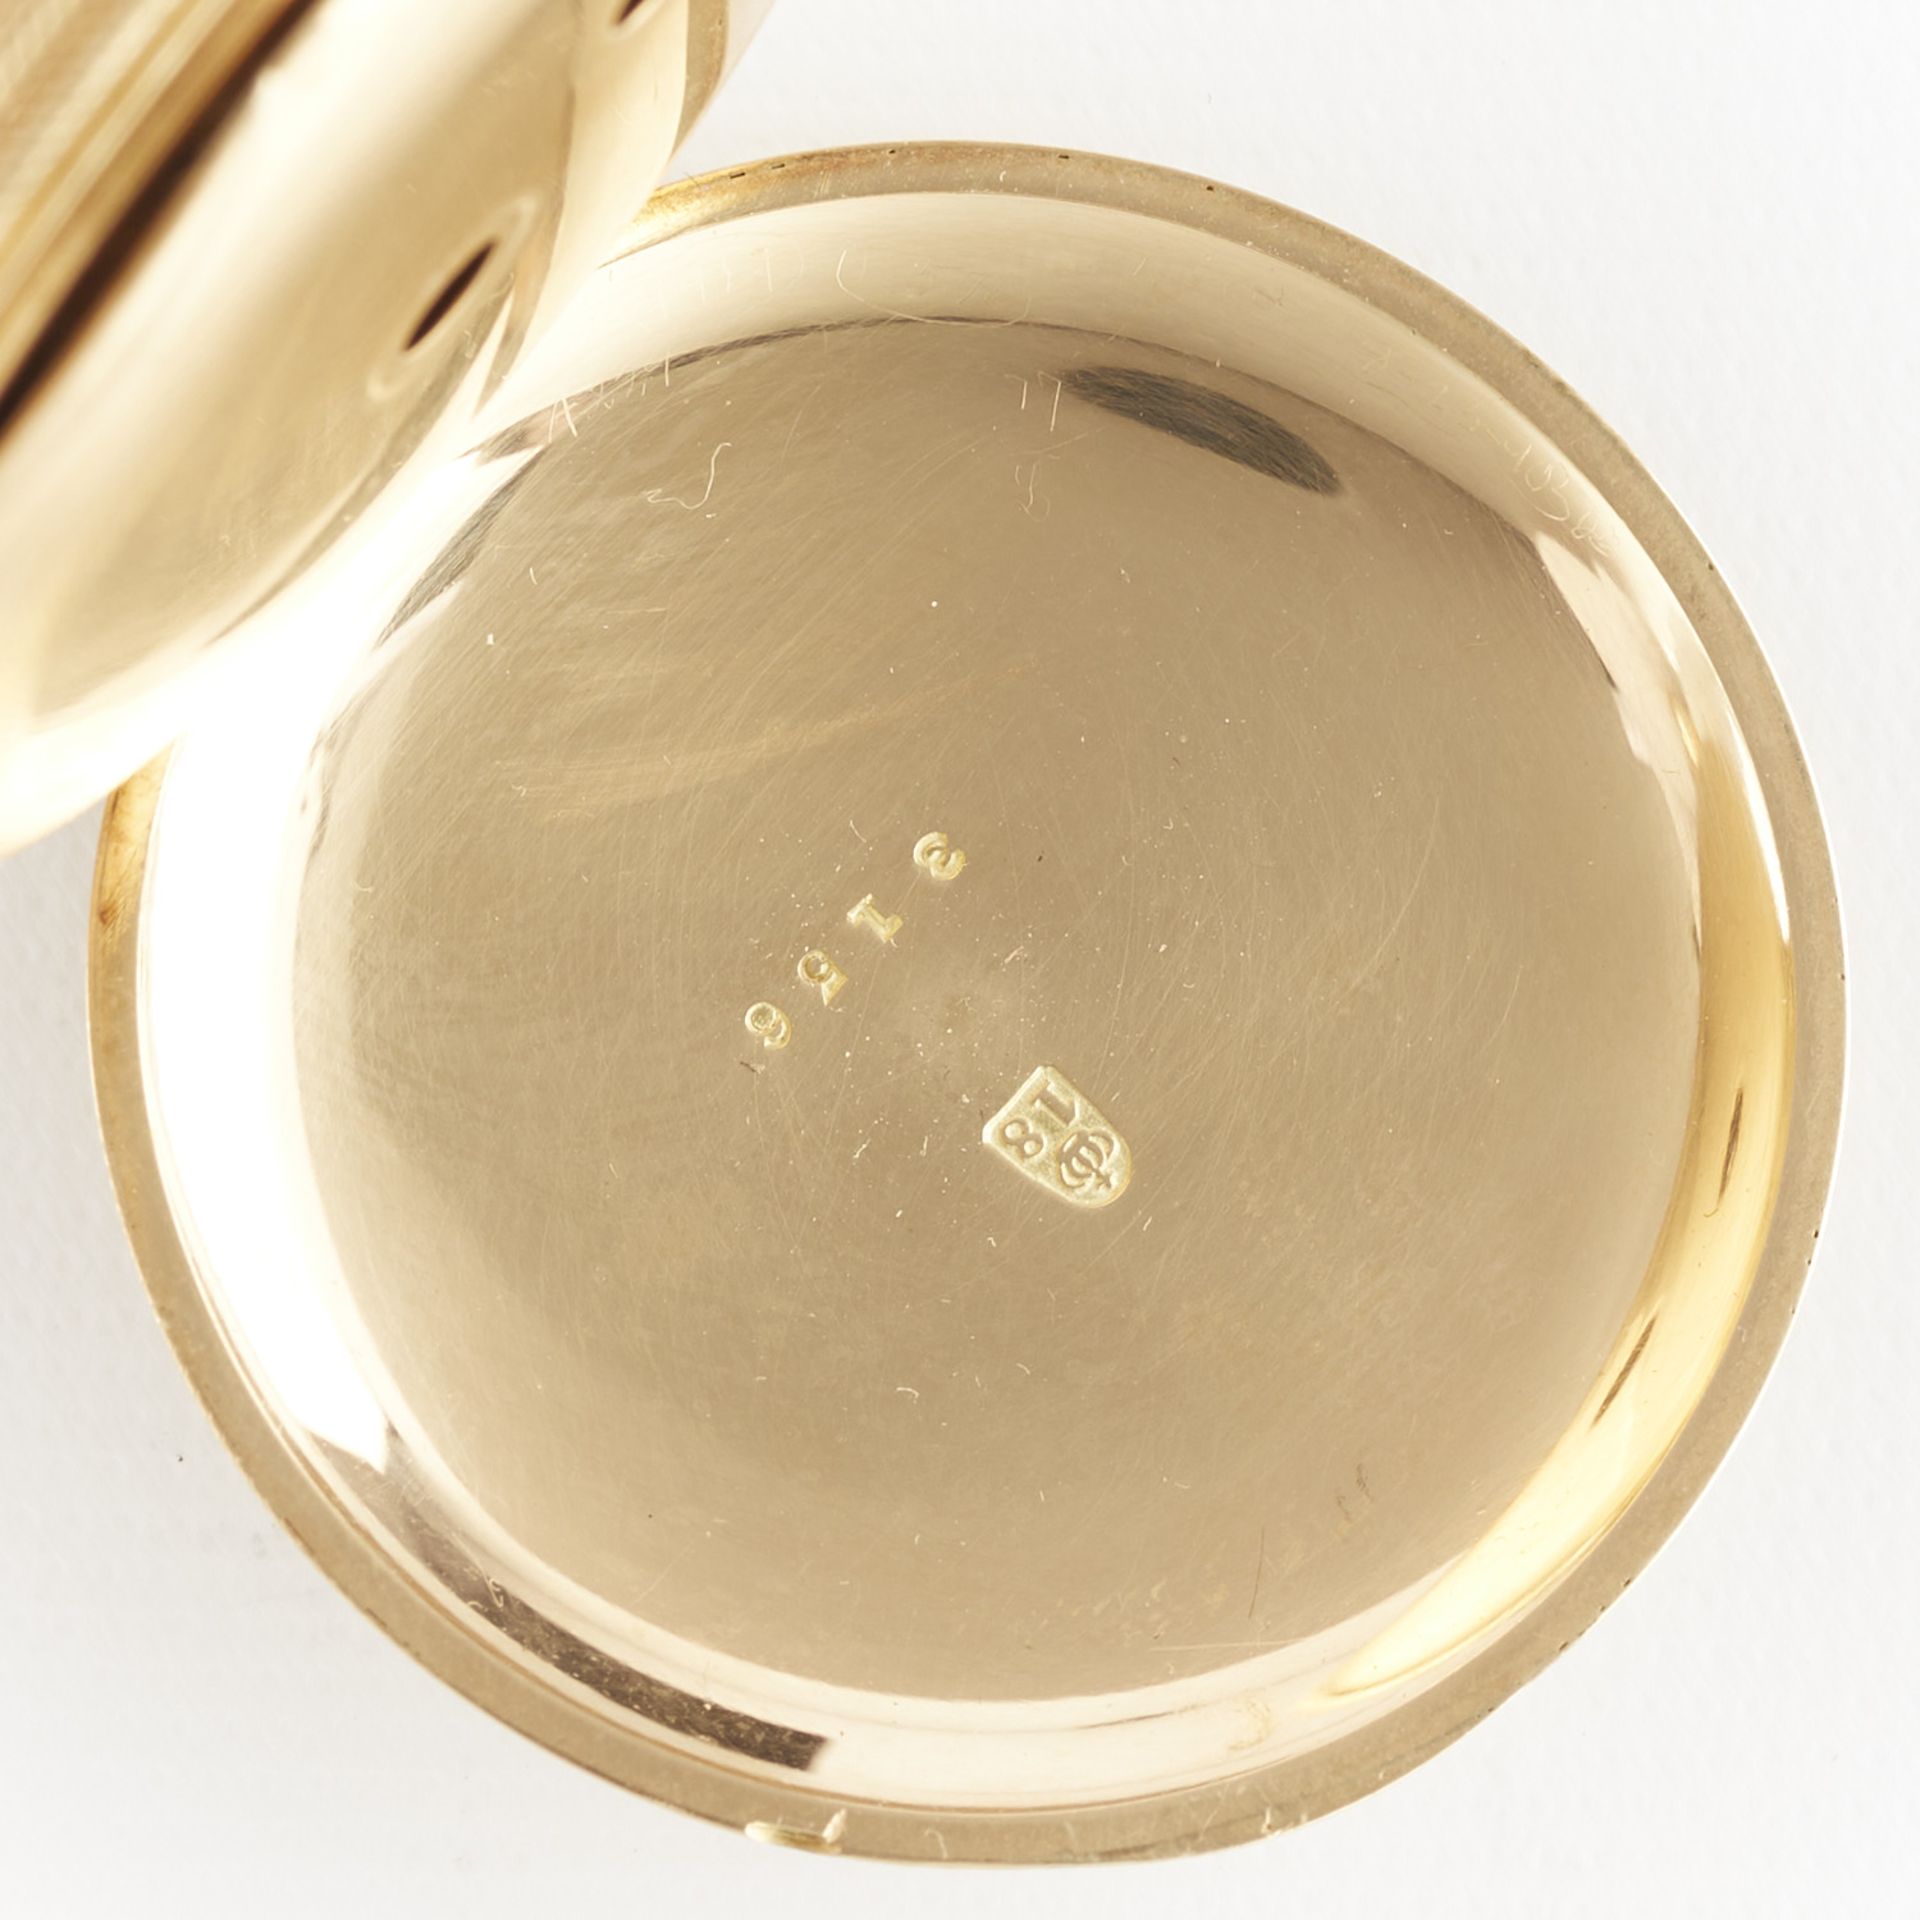 Elgin Gail Borden 18k Gold Pocket Watch - Image 7 of 7